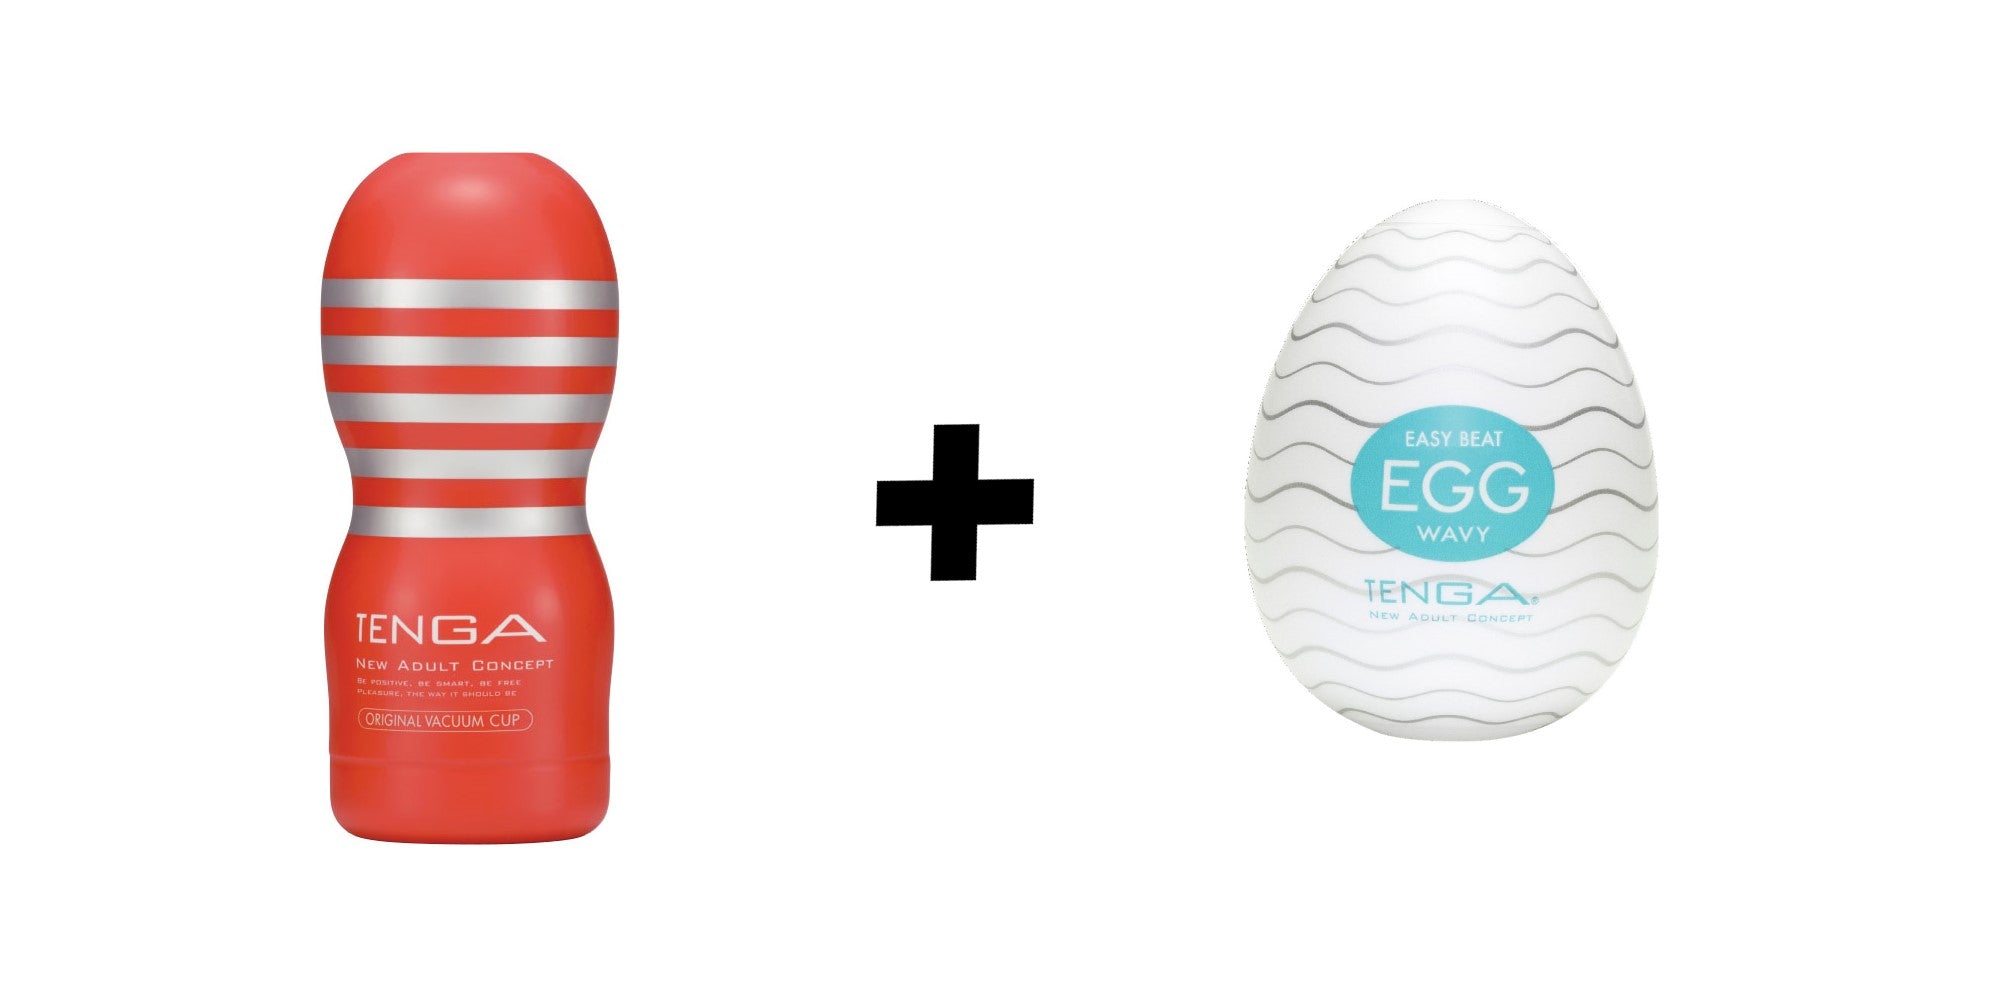 Tenga Egg – Toys of Eros